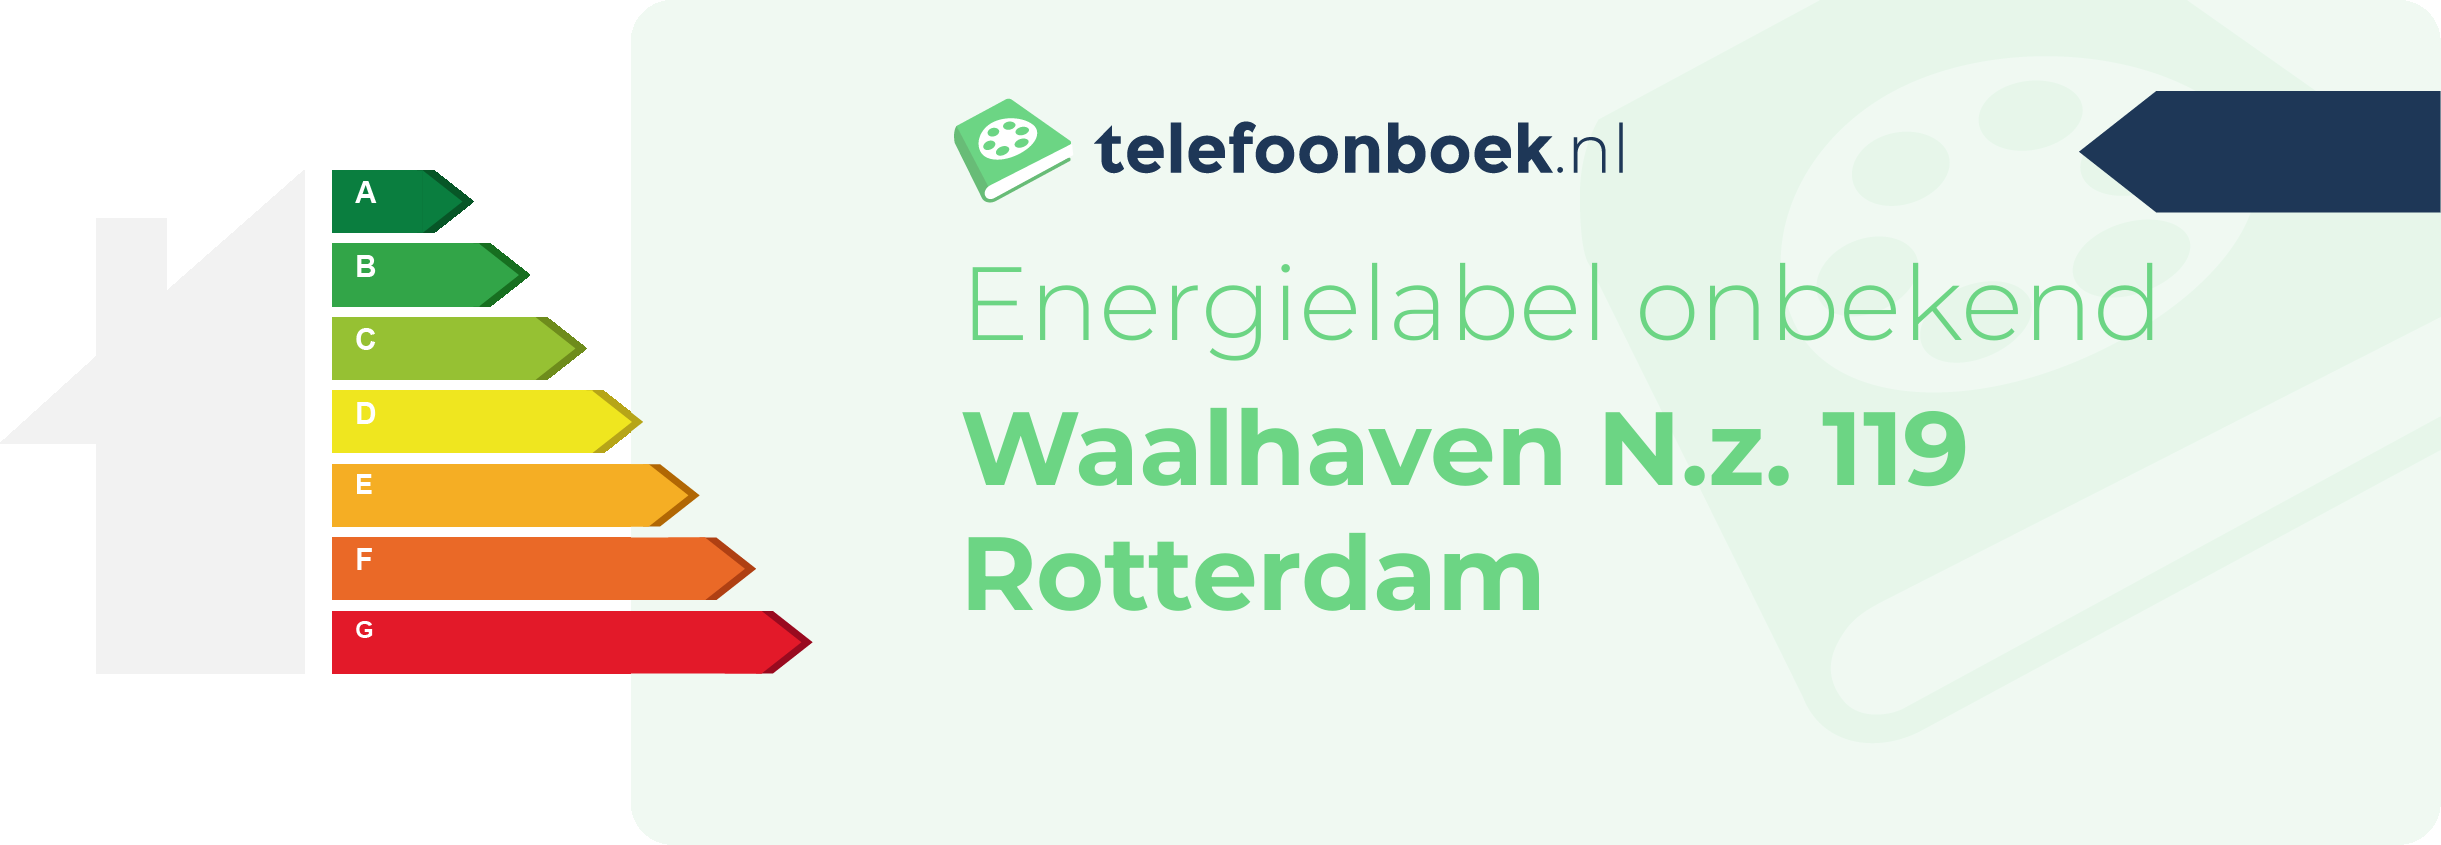 Energielabel Waalhaven N.z. 119 Rotterdam